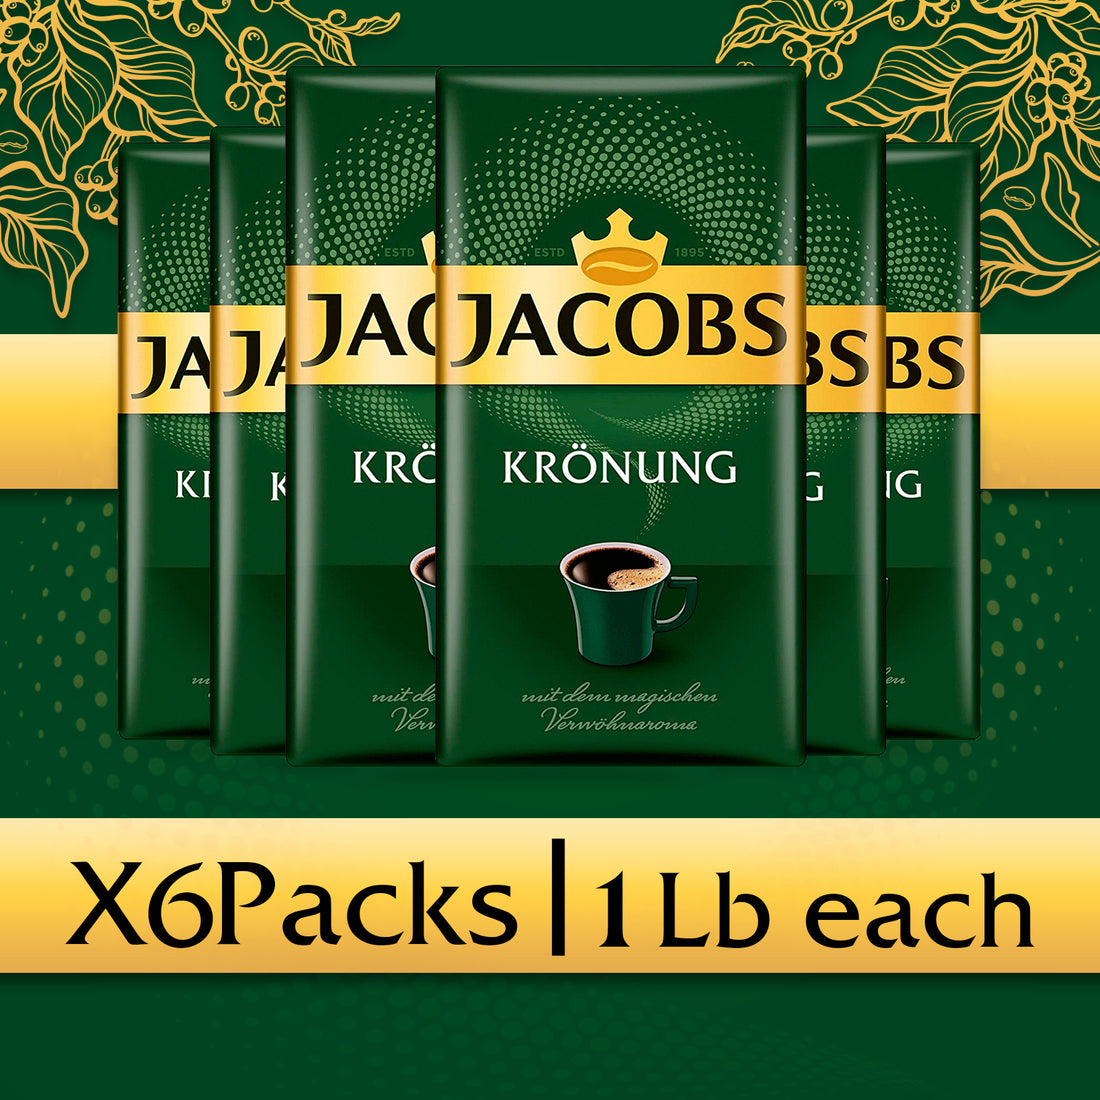 Jacobs Kronung 500g (6-Pack), German Ground Coffee - Total 3kg / 6.6 LB